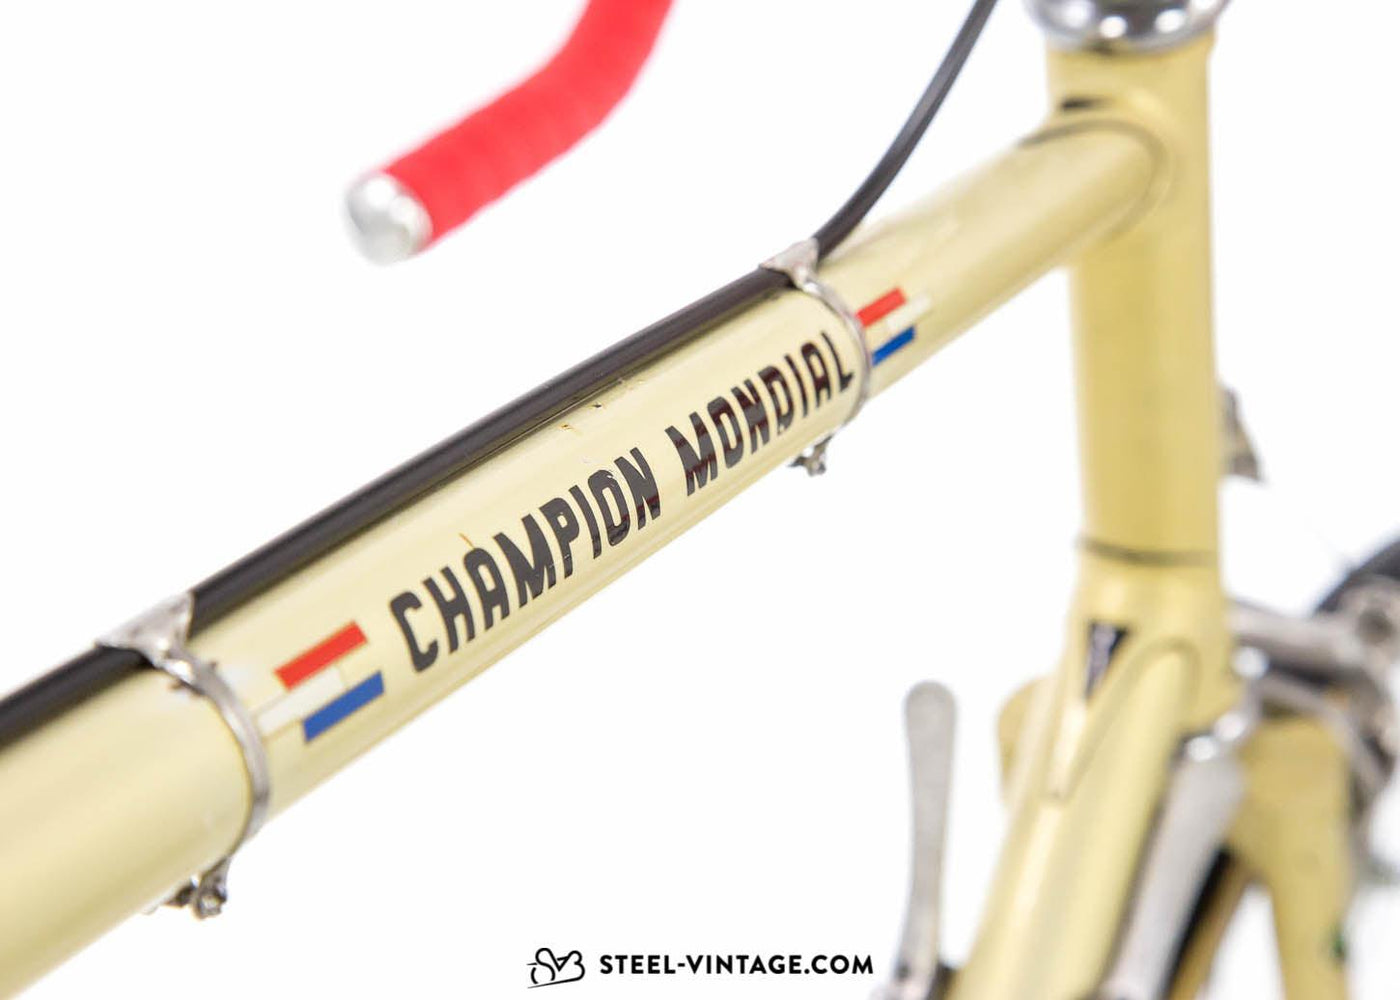 Gazelle Champion Mondial Classic Racing Bike 1975 - Steel Vintage Bikes